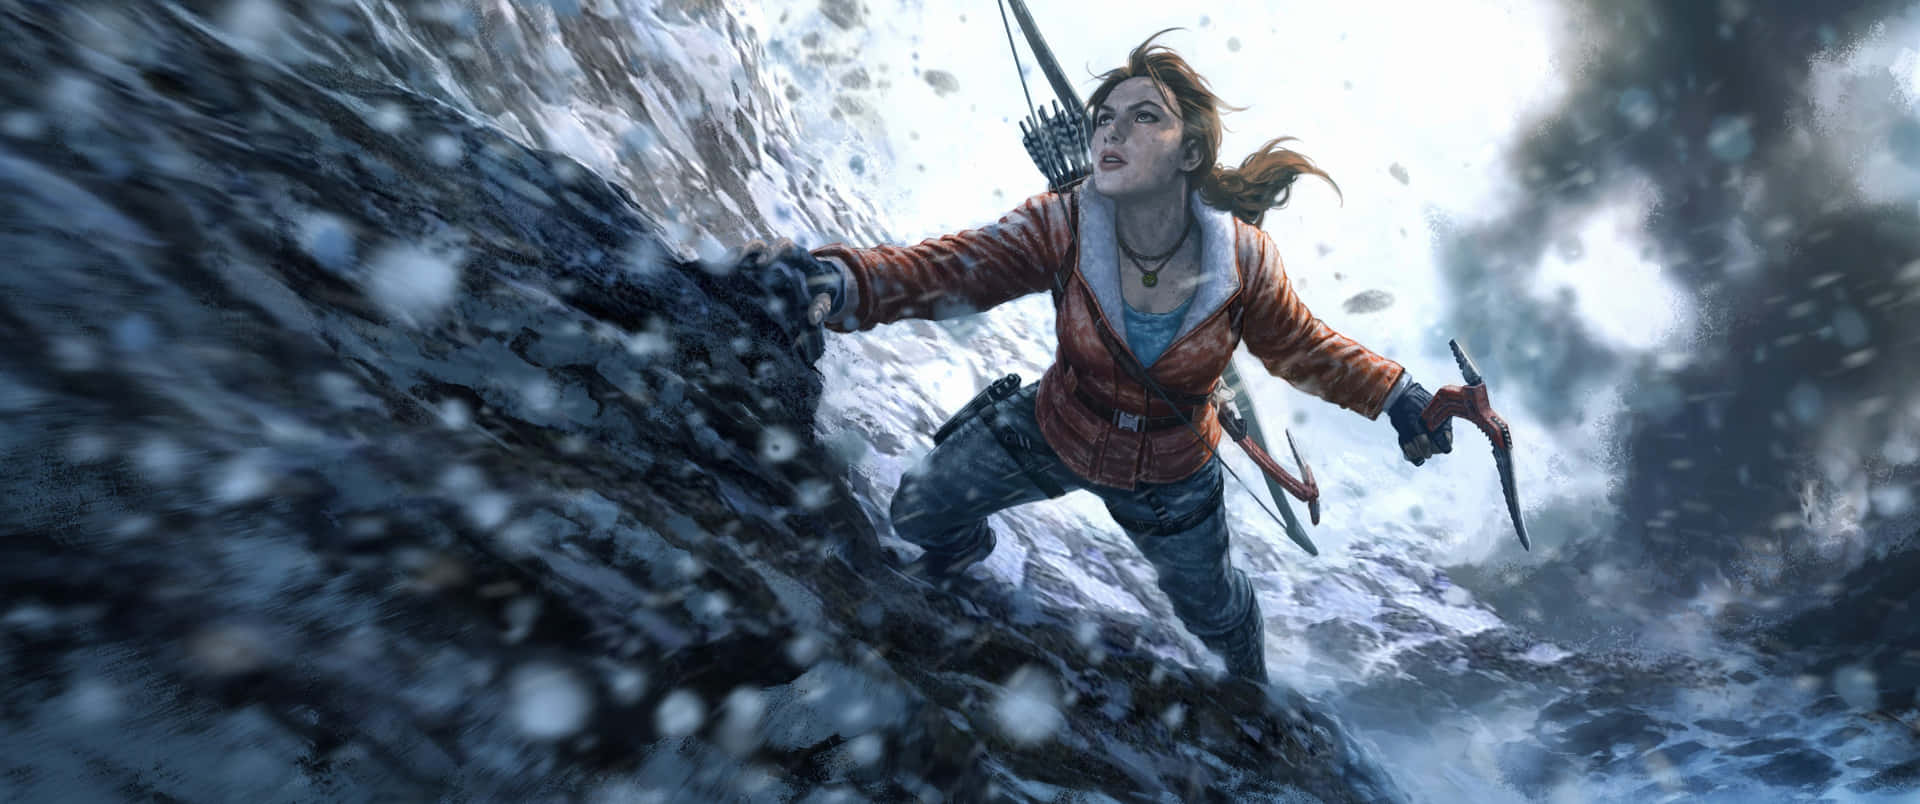 Lara Climbing Mountain 3440x1440p Rise Of The Tomb Raider Background